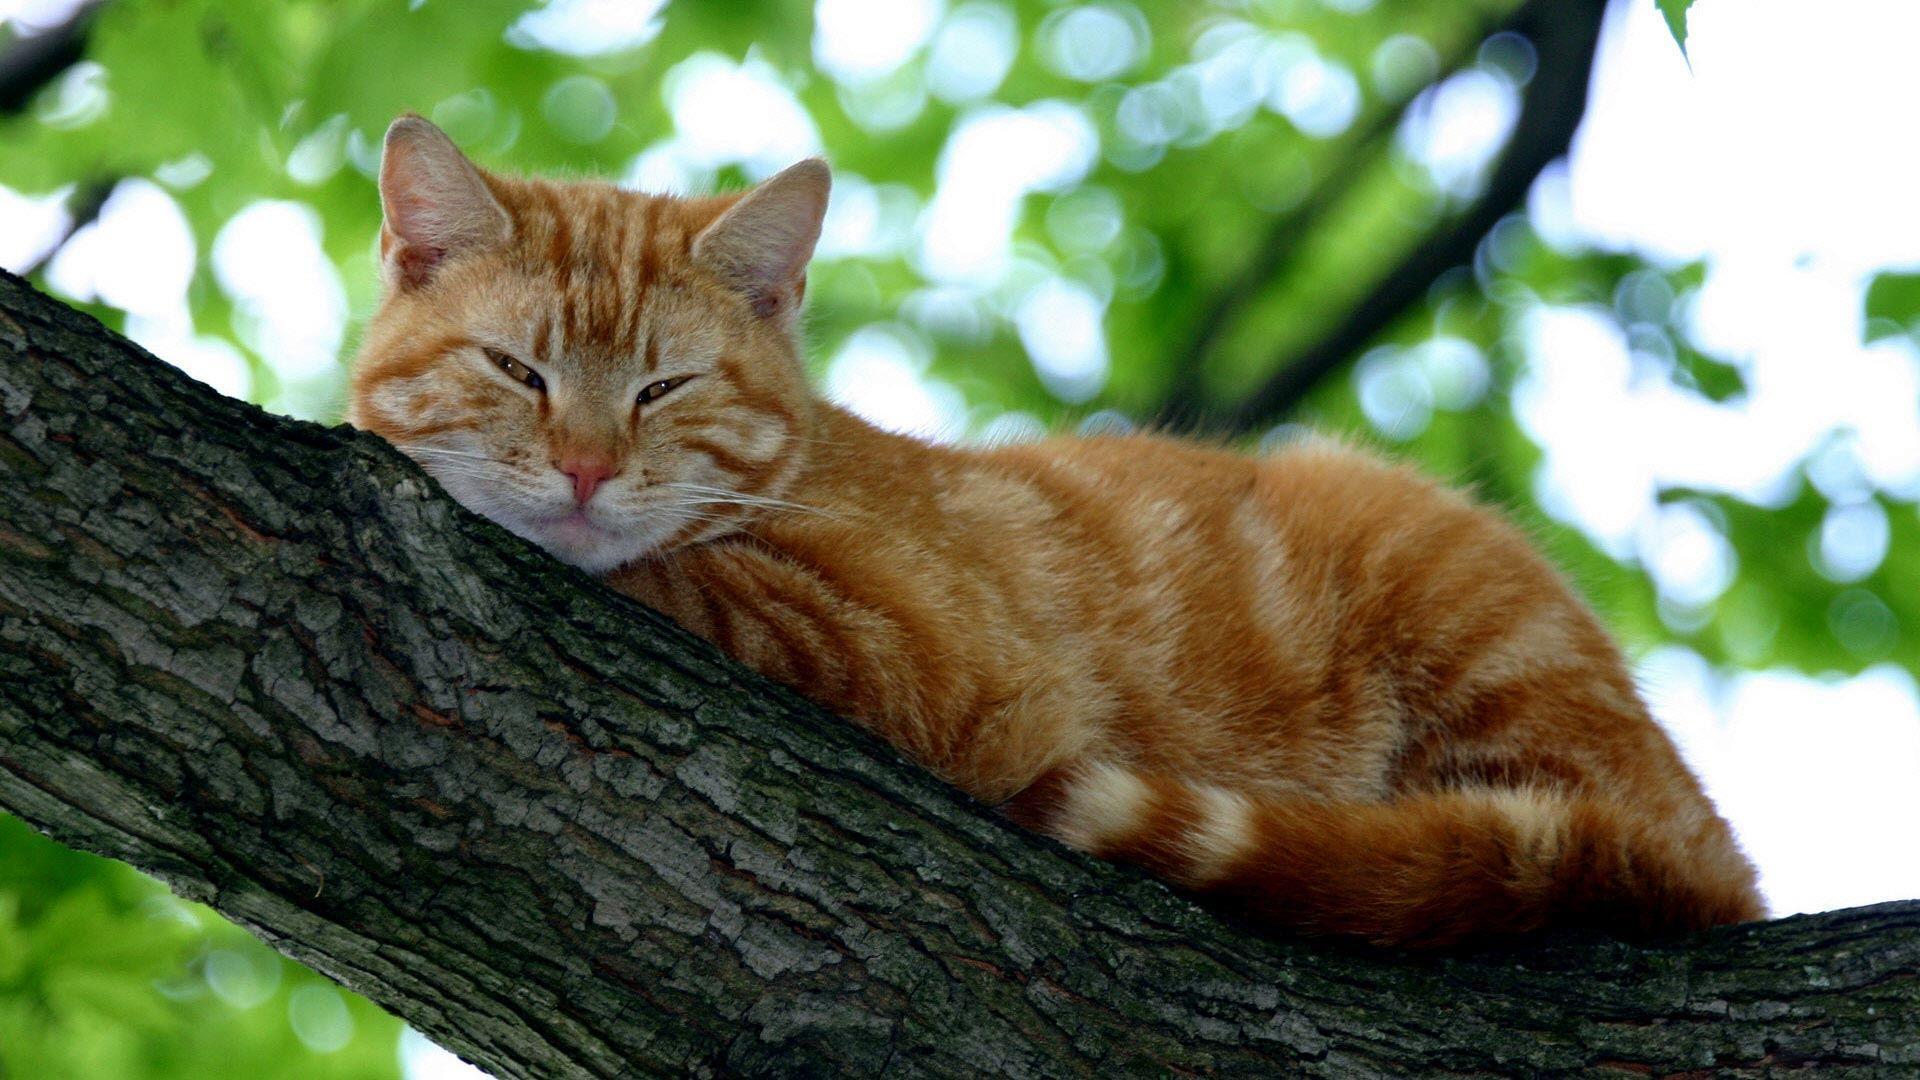 Full HD Cat Wallpaper ♥: Orange Cat in a Tree. Kitten picture, Beautiful cats, Cats